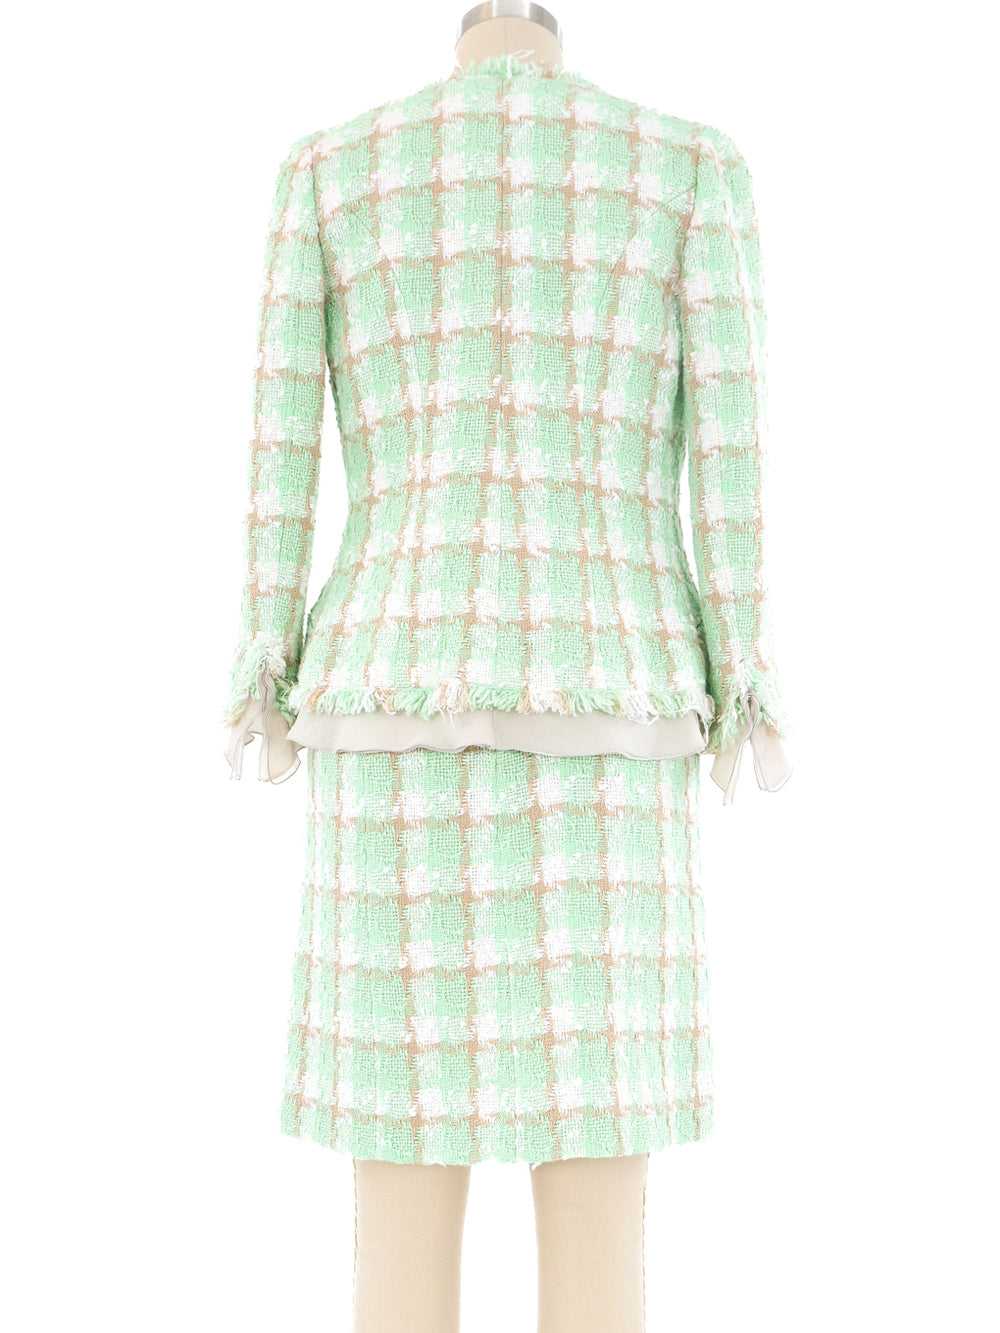 Chanel Mint Tweed Skirt Ensemble - image 6